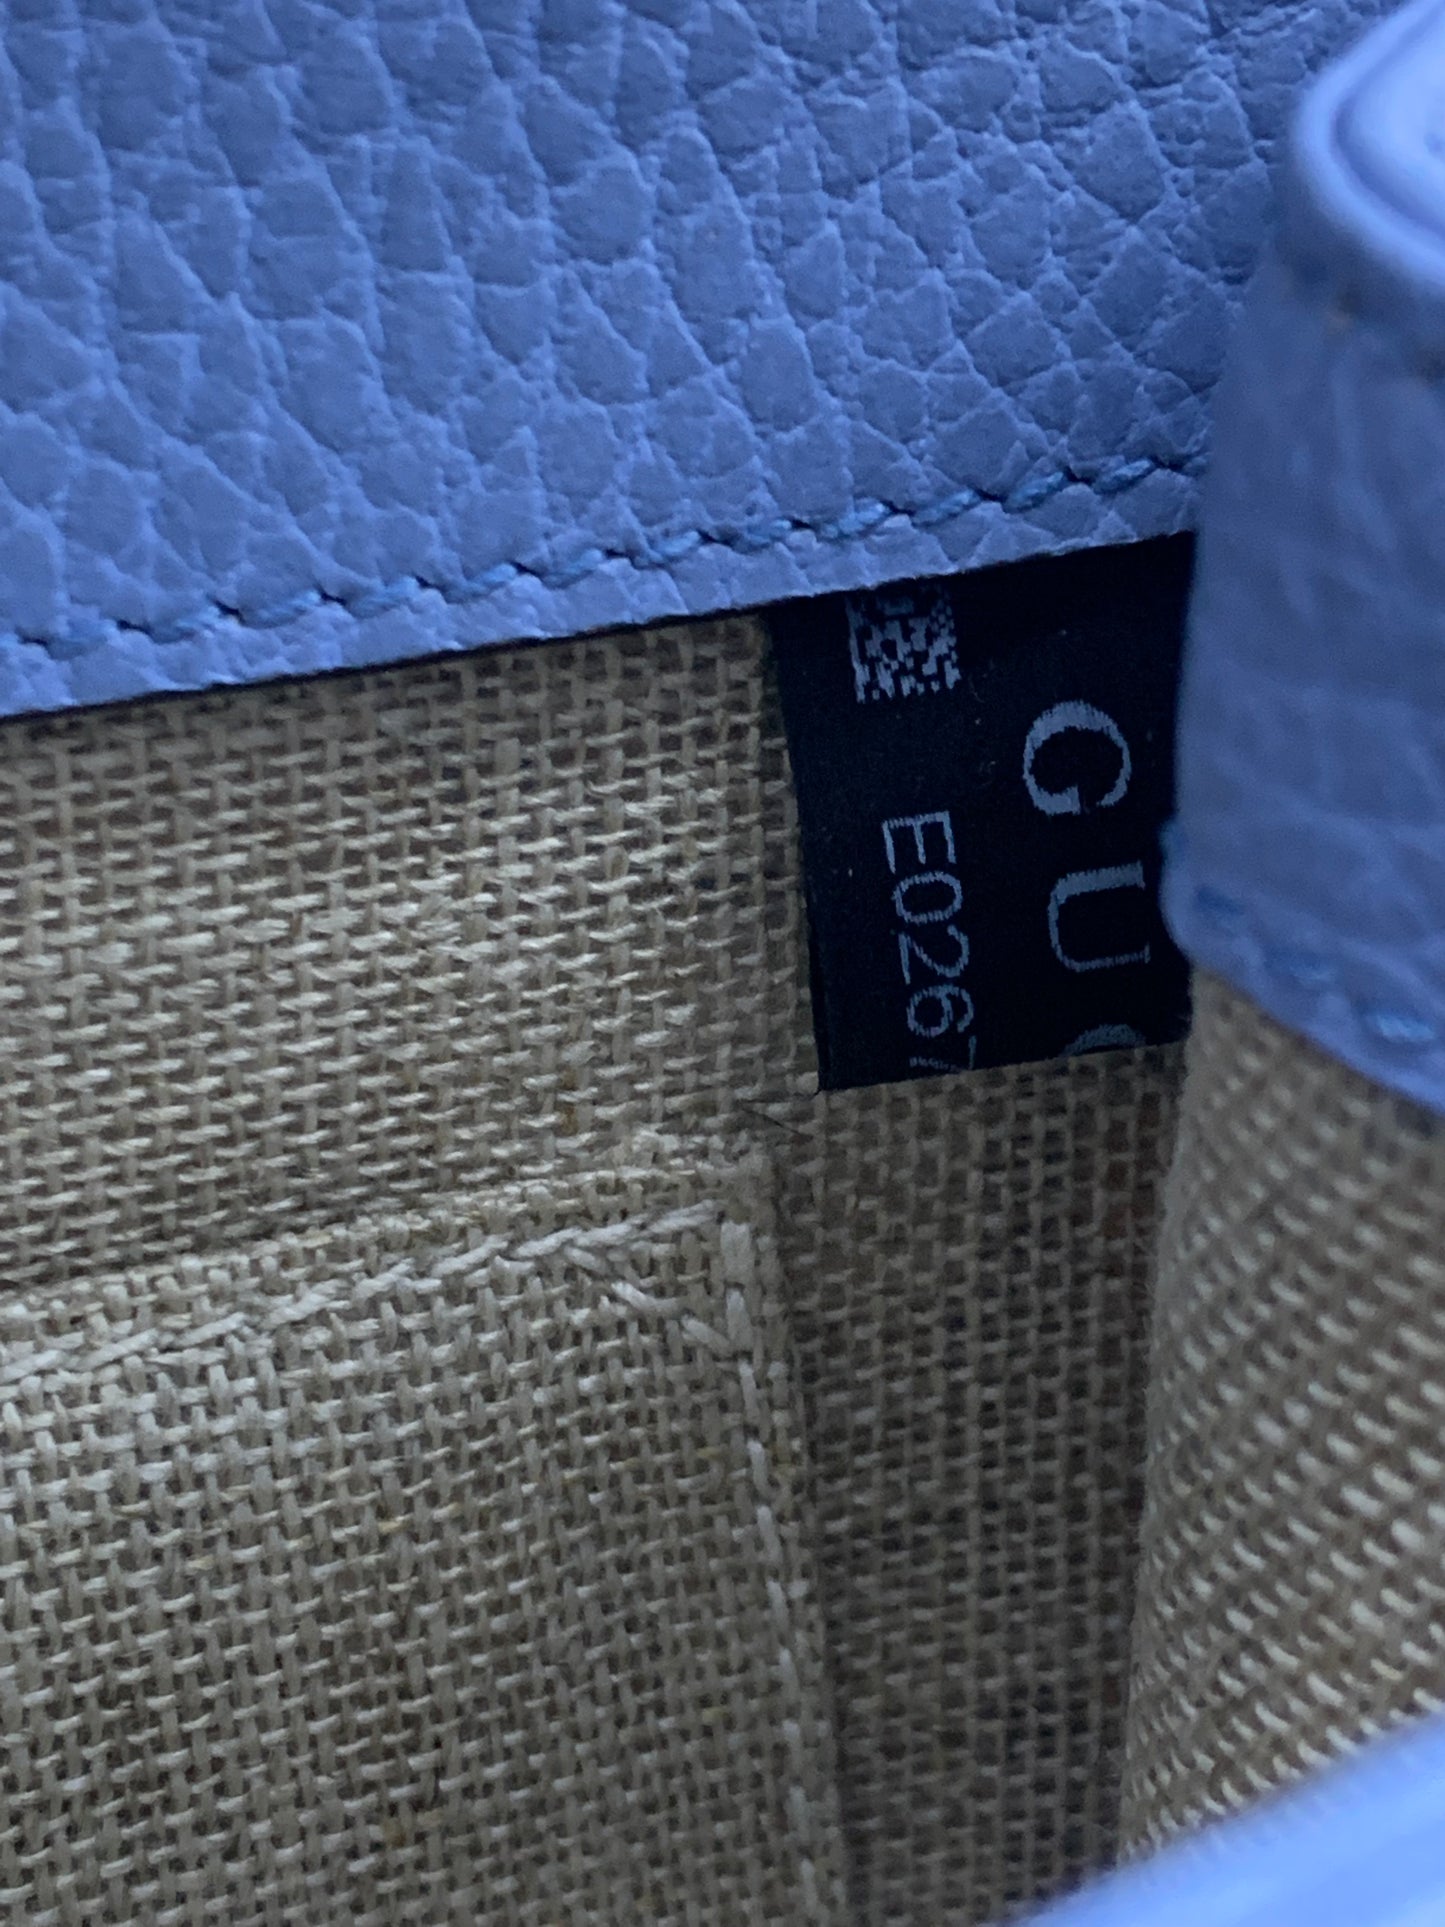 Gucci Blue Leather Small Interlocking G Crossbody Bag